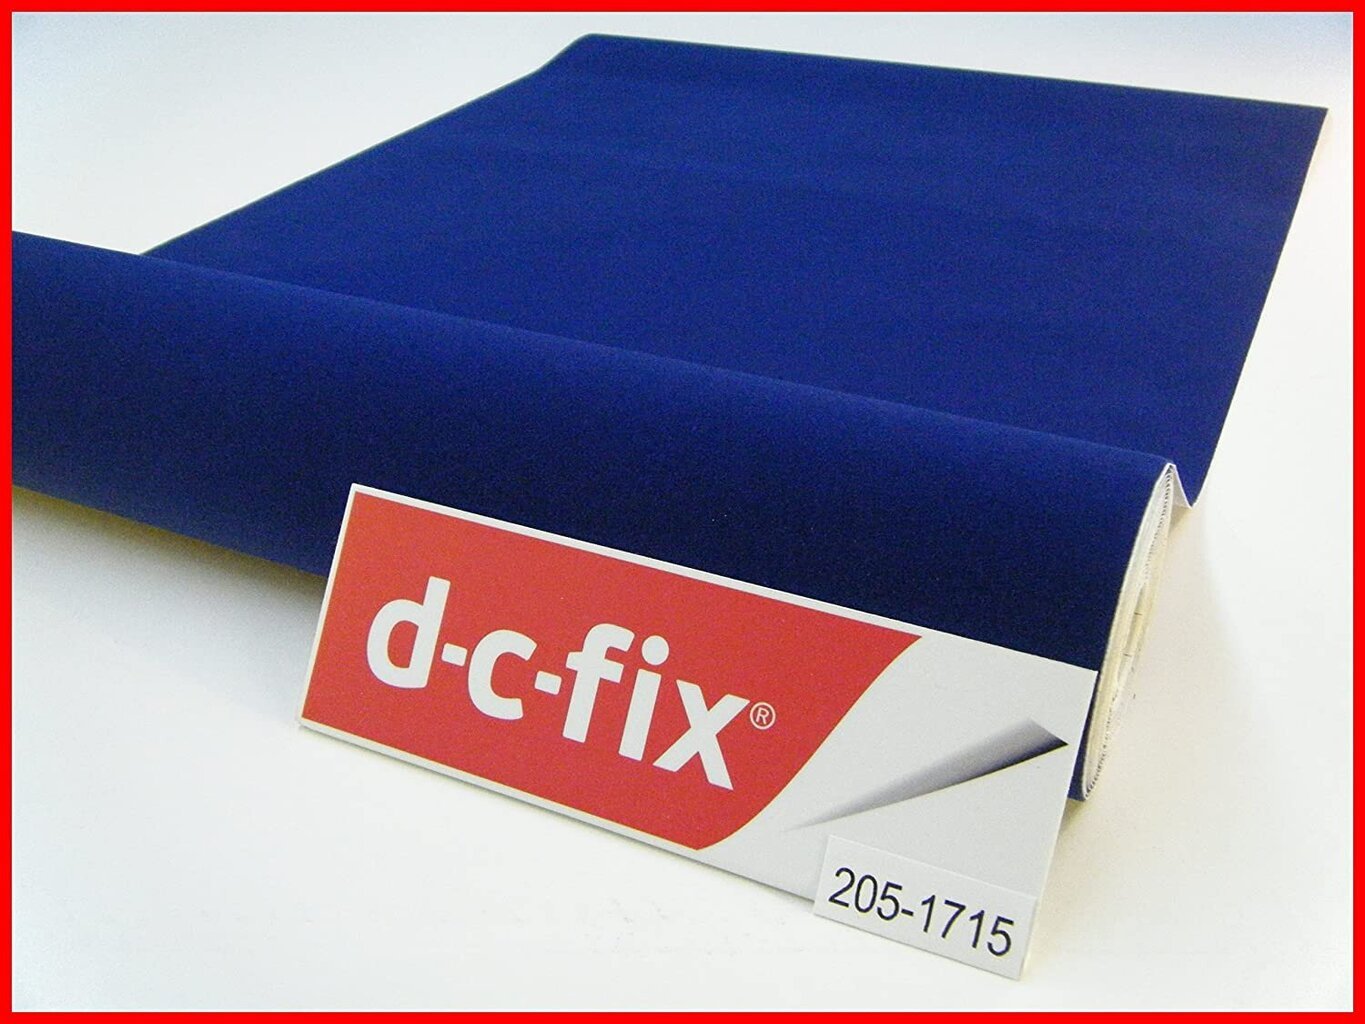 D-c-fix lipni veliūrinė plėvelė 0,45mx2 metrai, 205-1715 kaina ir informacija | Lipnios plėvelės | pigu.lt